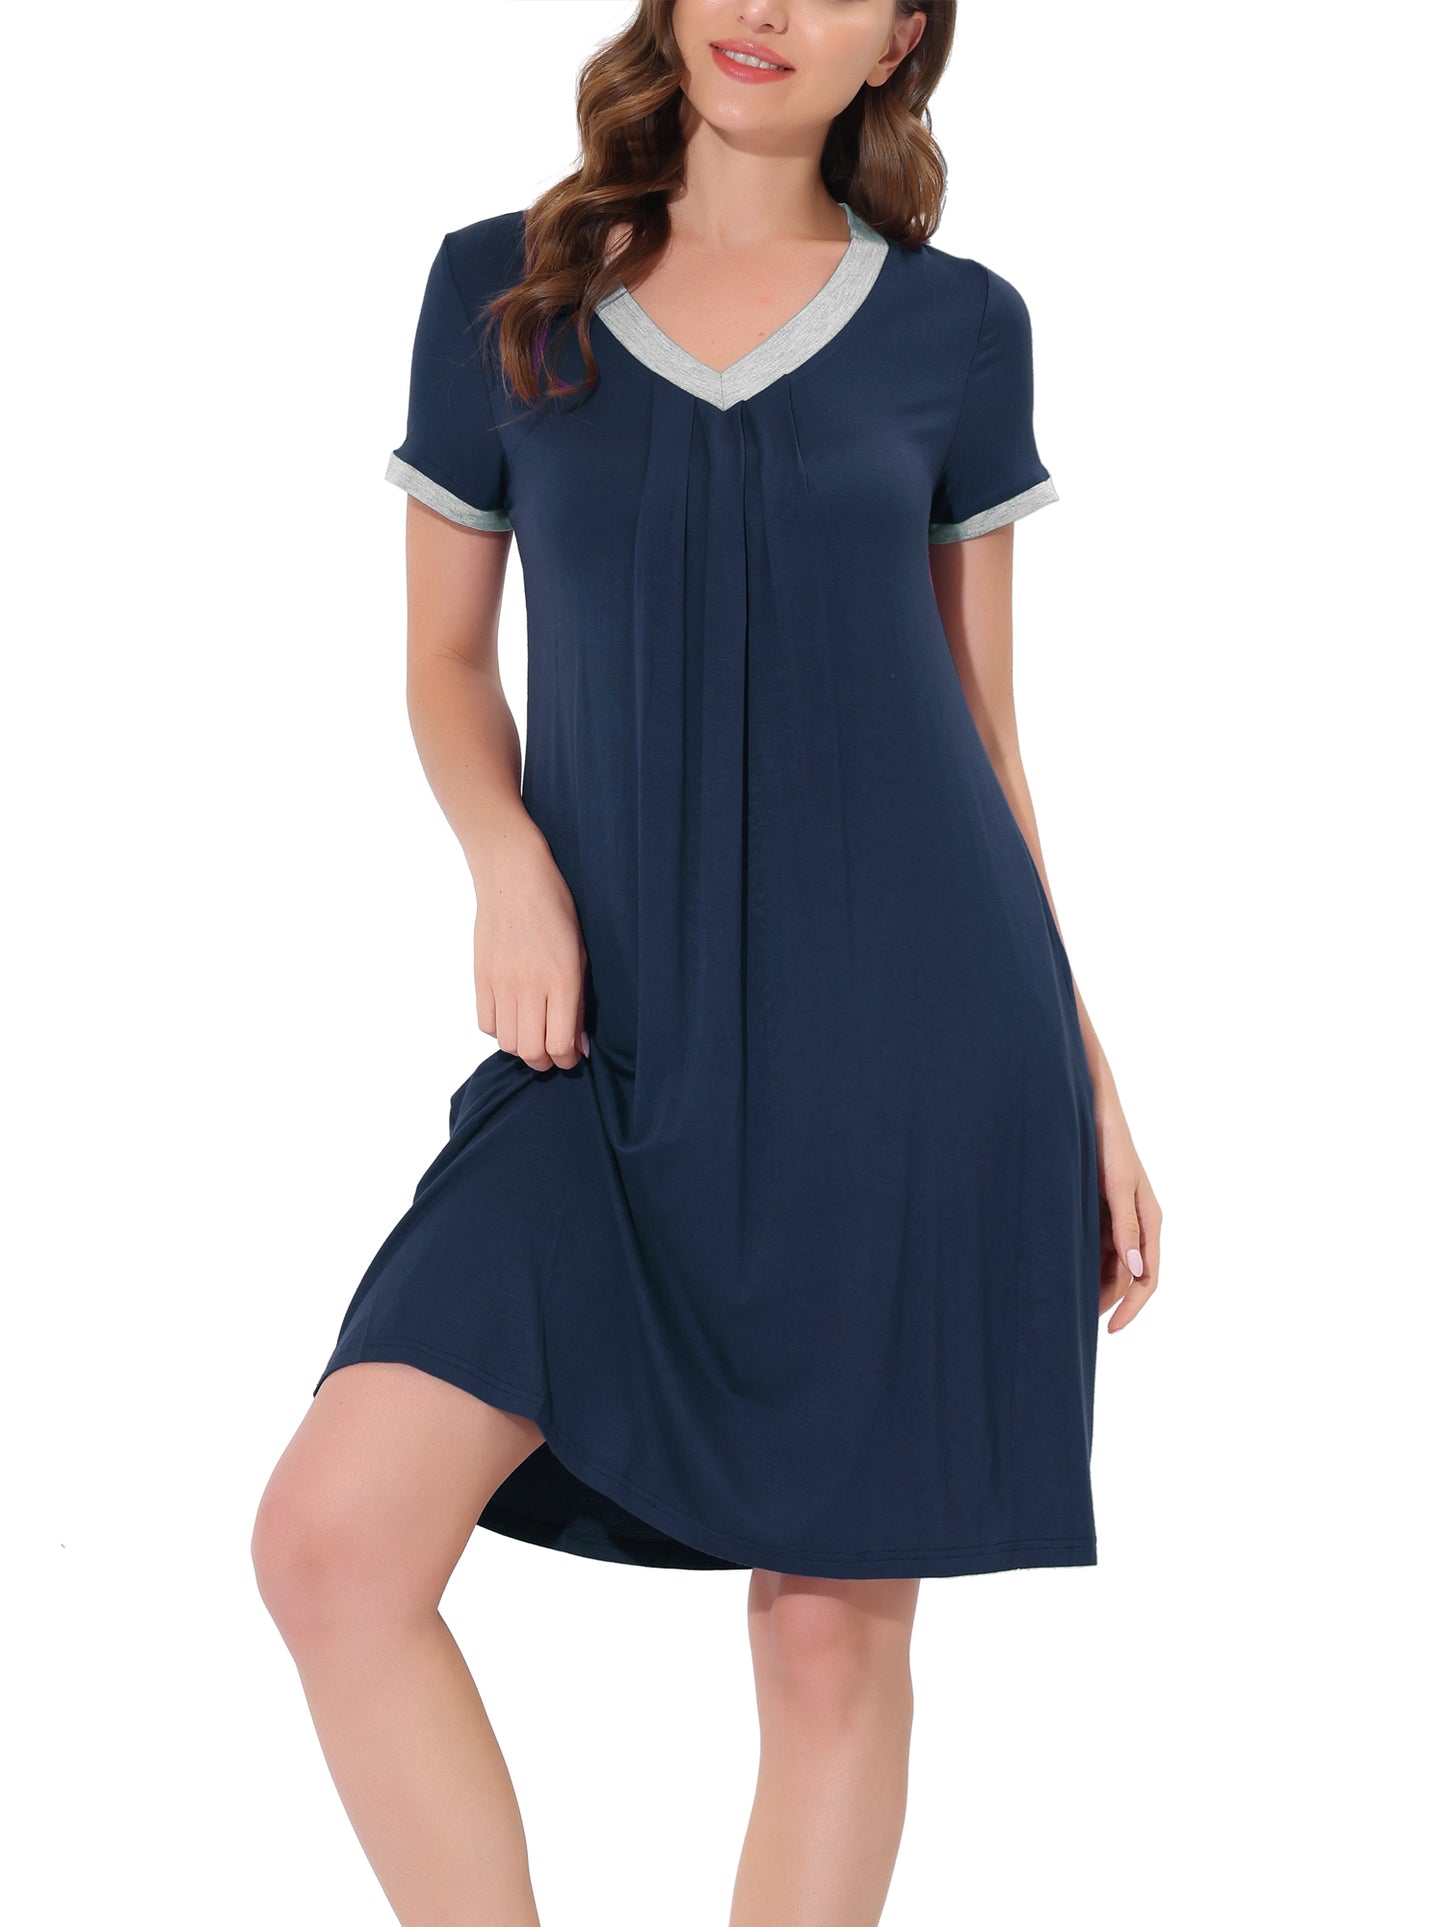 cheibear Pajama Dress Nightshirt Sleepwear V-Neck with Pockets Lounge Nightgown Blue